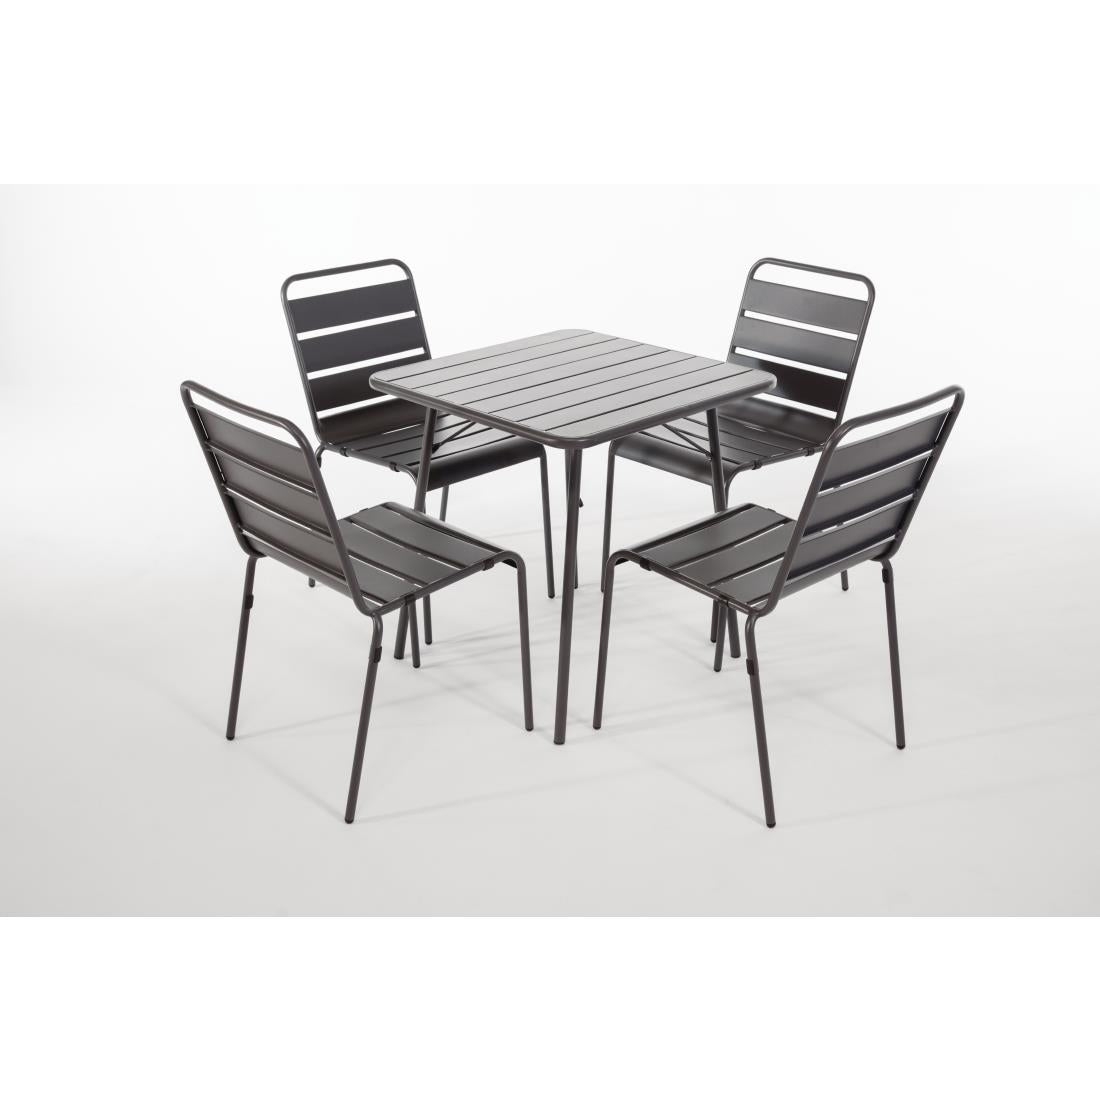 Bolero Square Slatted Steel Table 700mm JD Catering Equipment Solutions Ltd